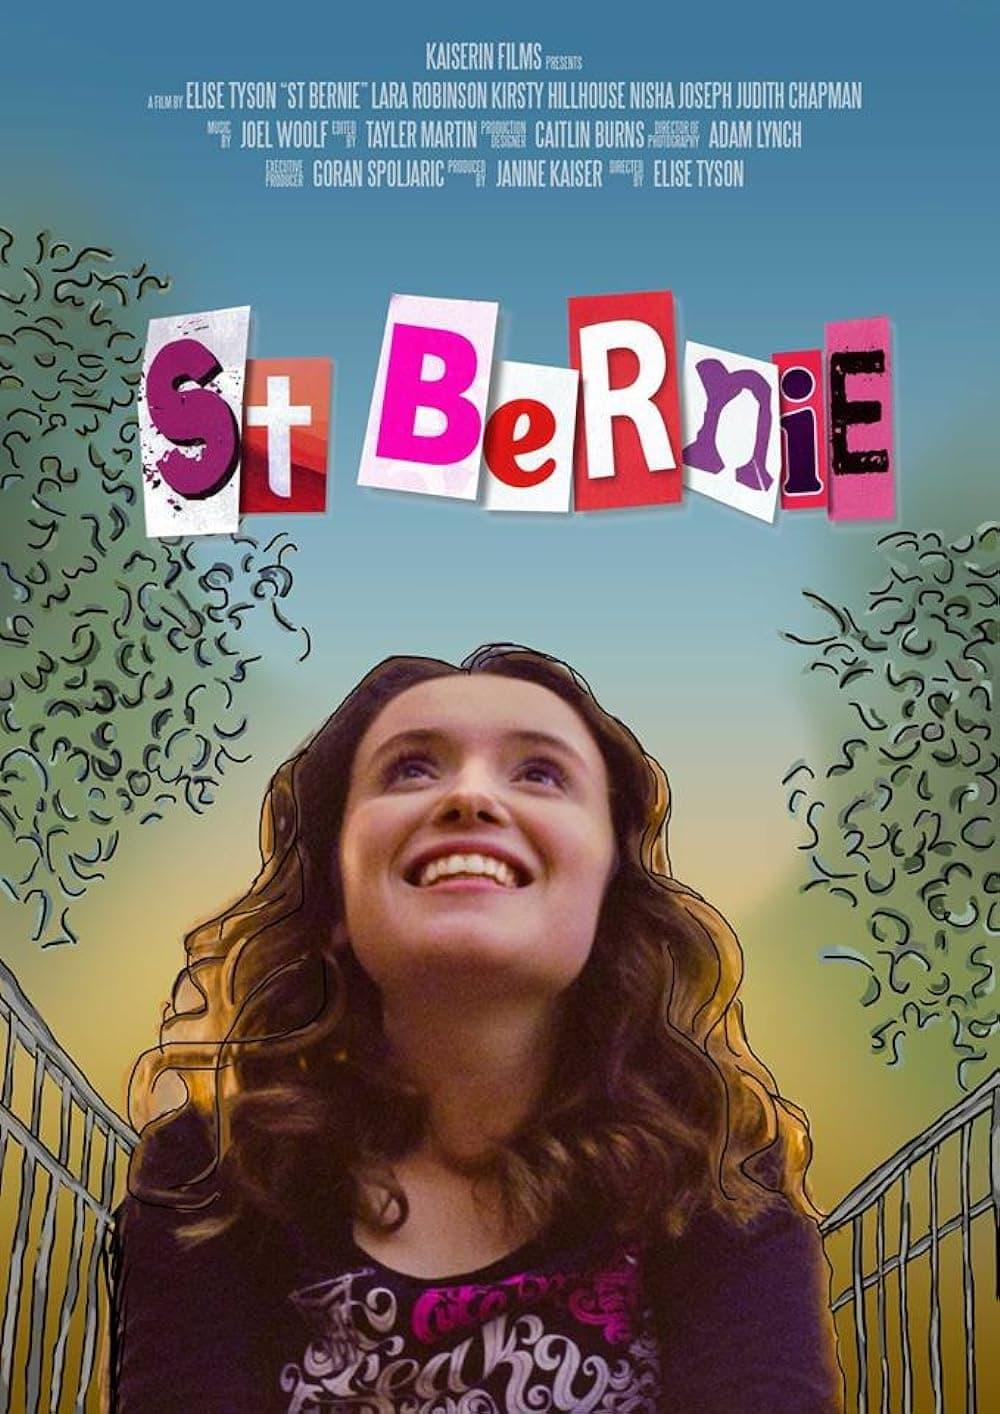 St Bernie poster